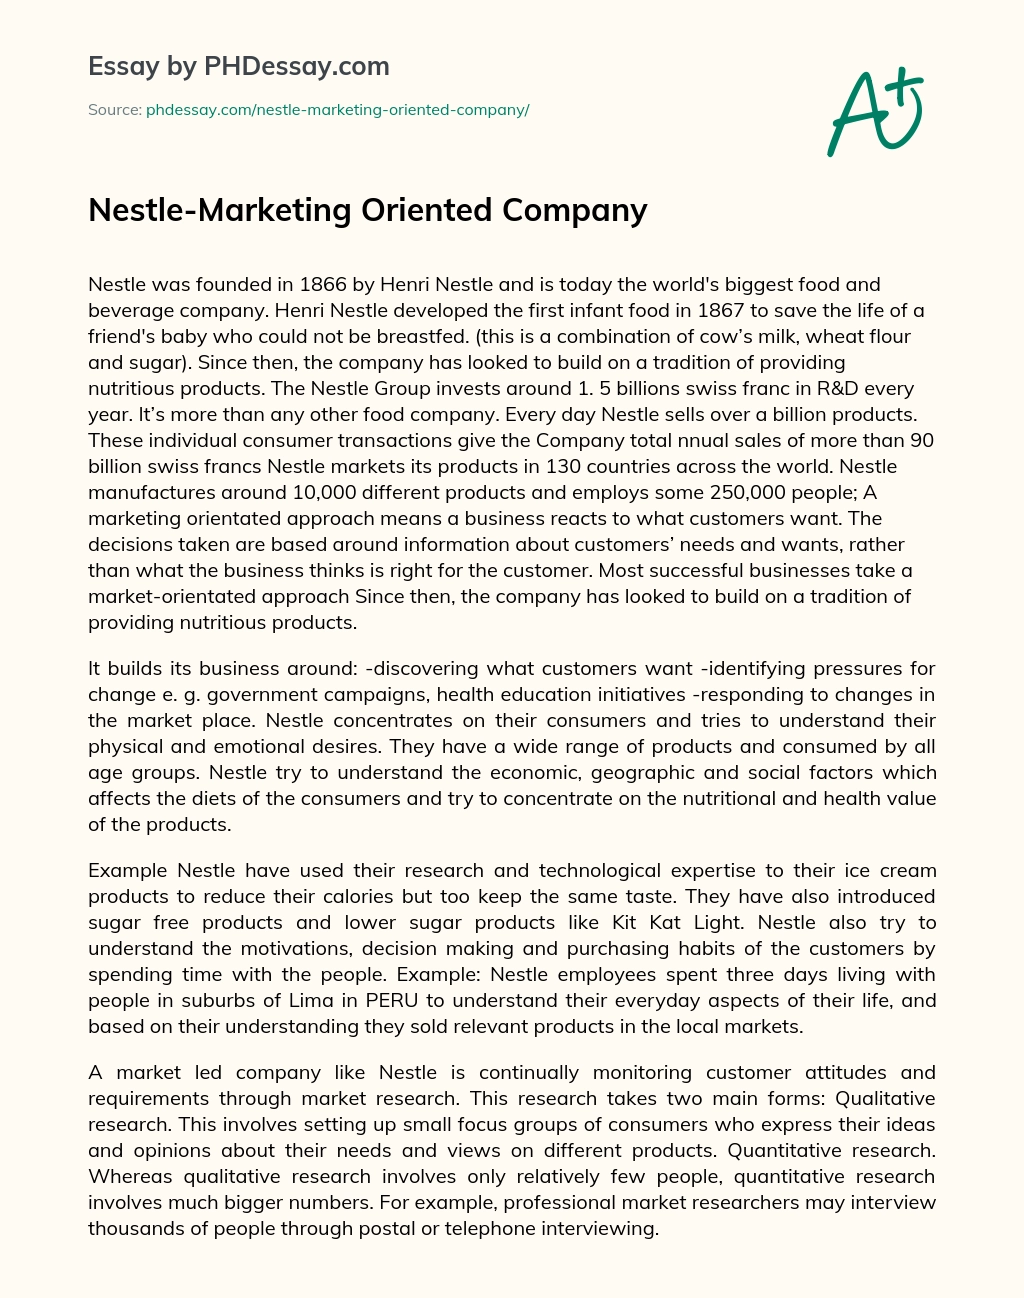 Nestle-Marketing Oriented Company essay